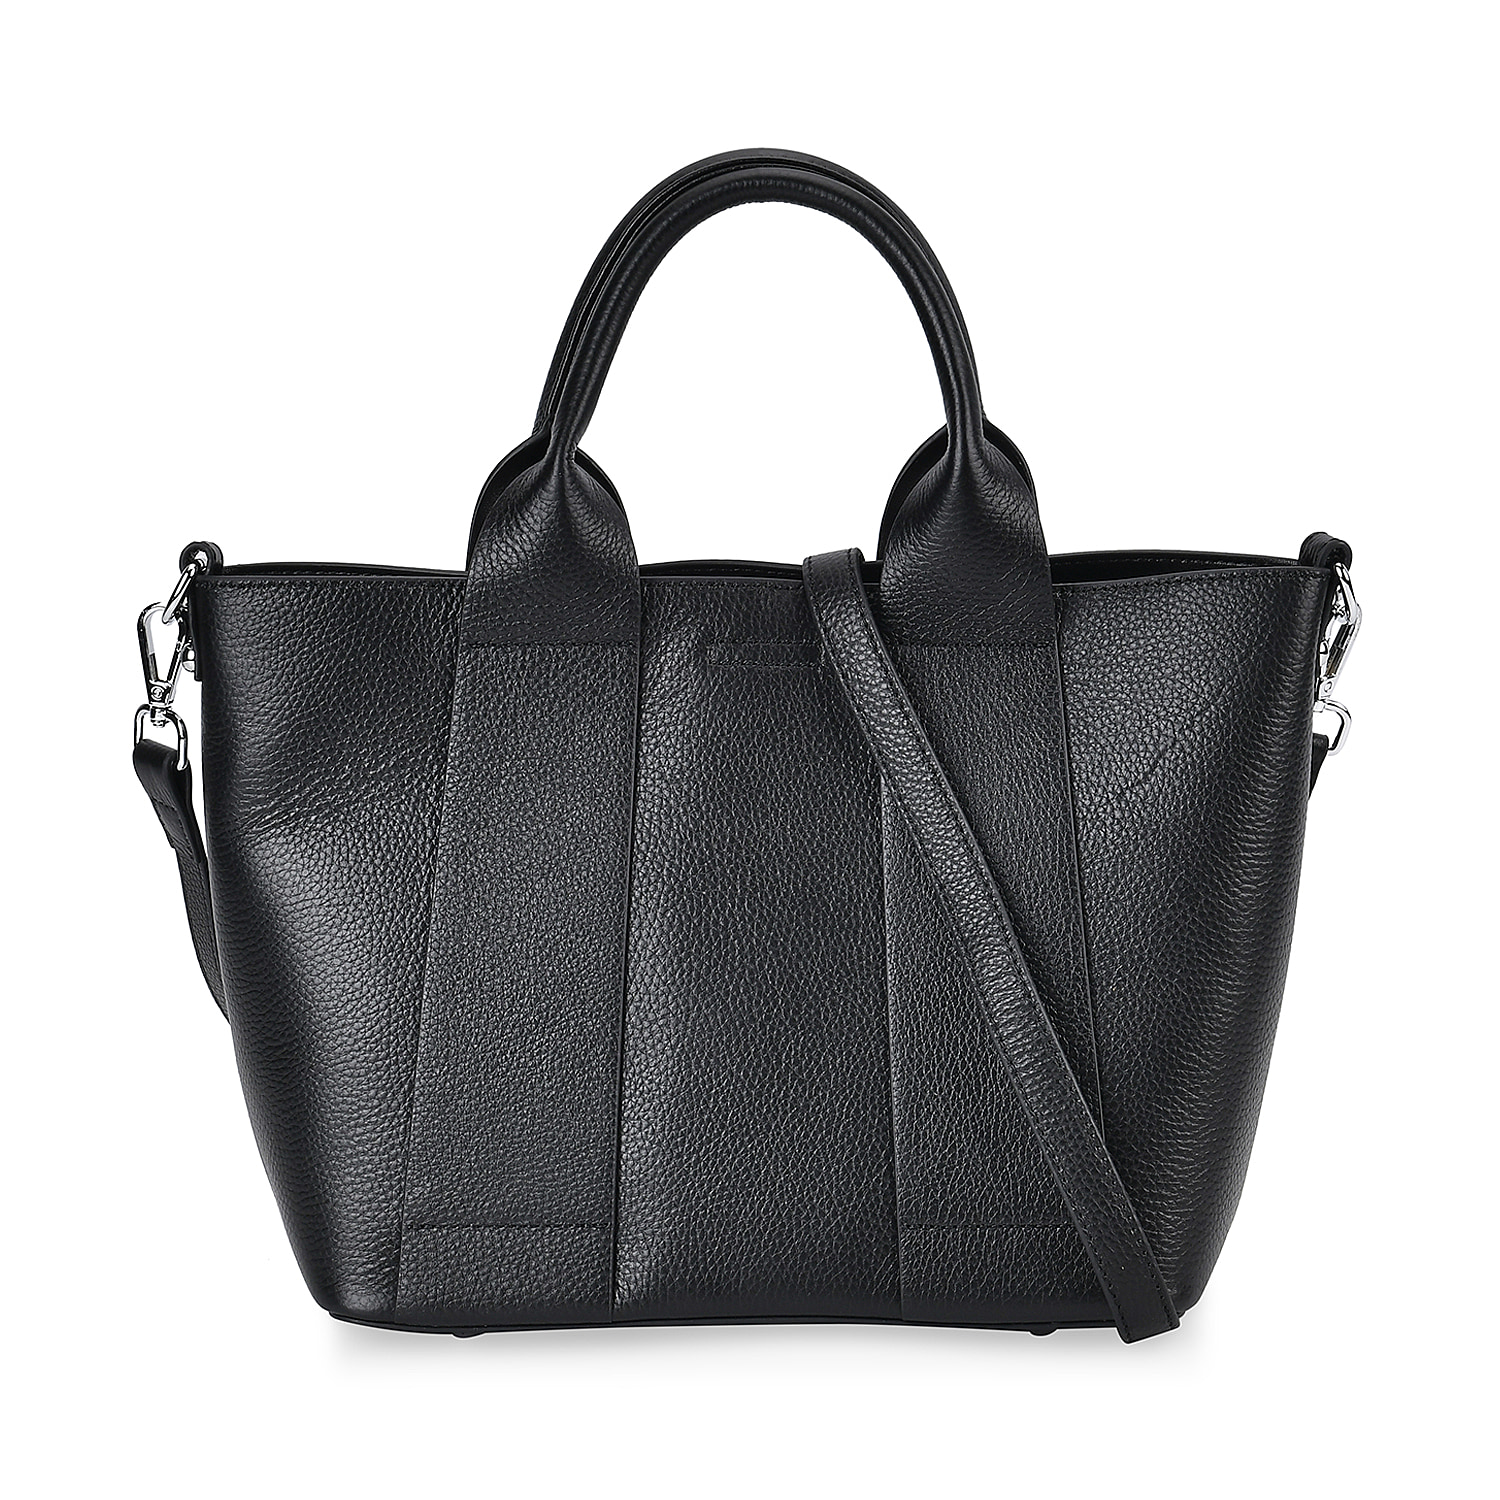 Genuine-Leather-Patterned-Crossbody-Bag-Size-34x12x22-cm-Black-Black